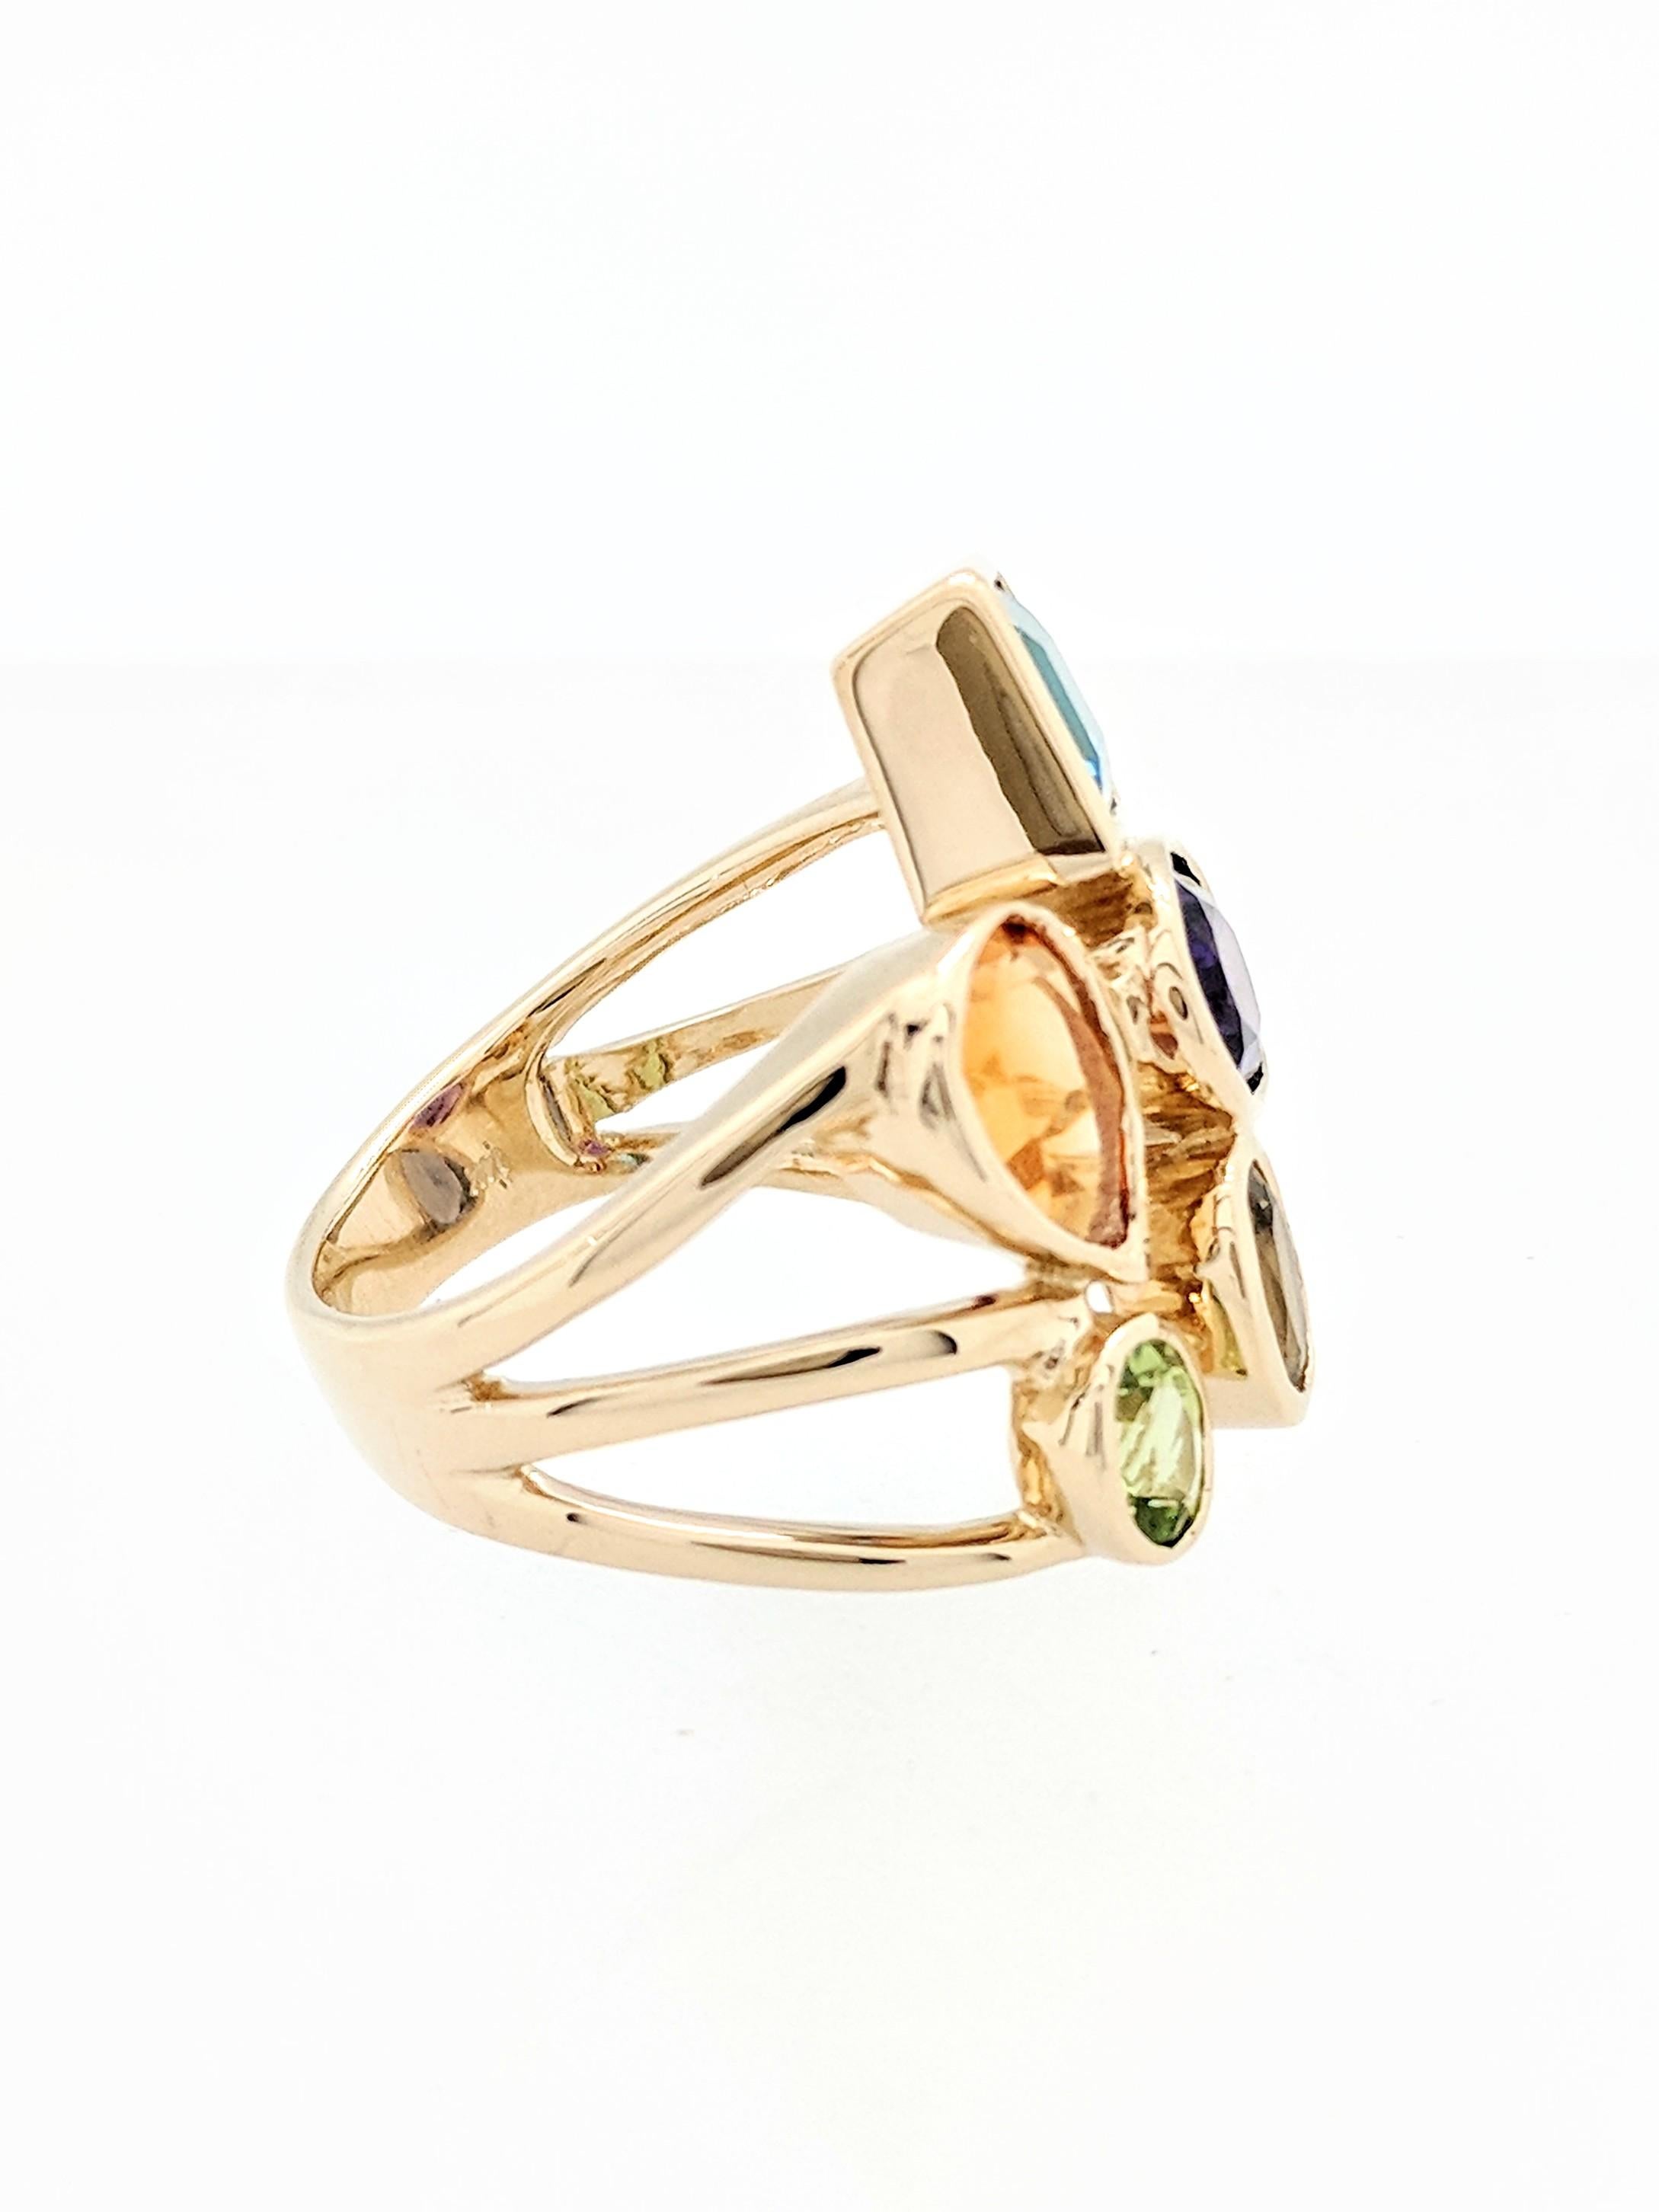 Contemporary 14 Karat Yellow Gold Bezel Set Multi-Gemstone Right Hand Ring